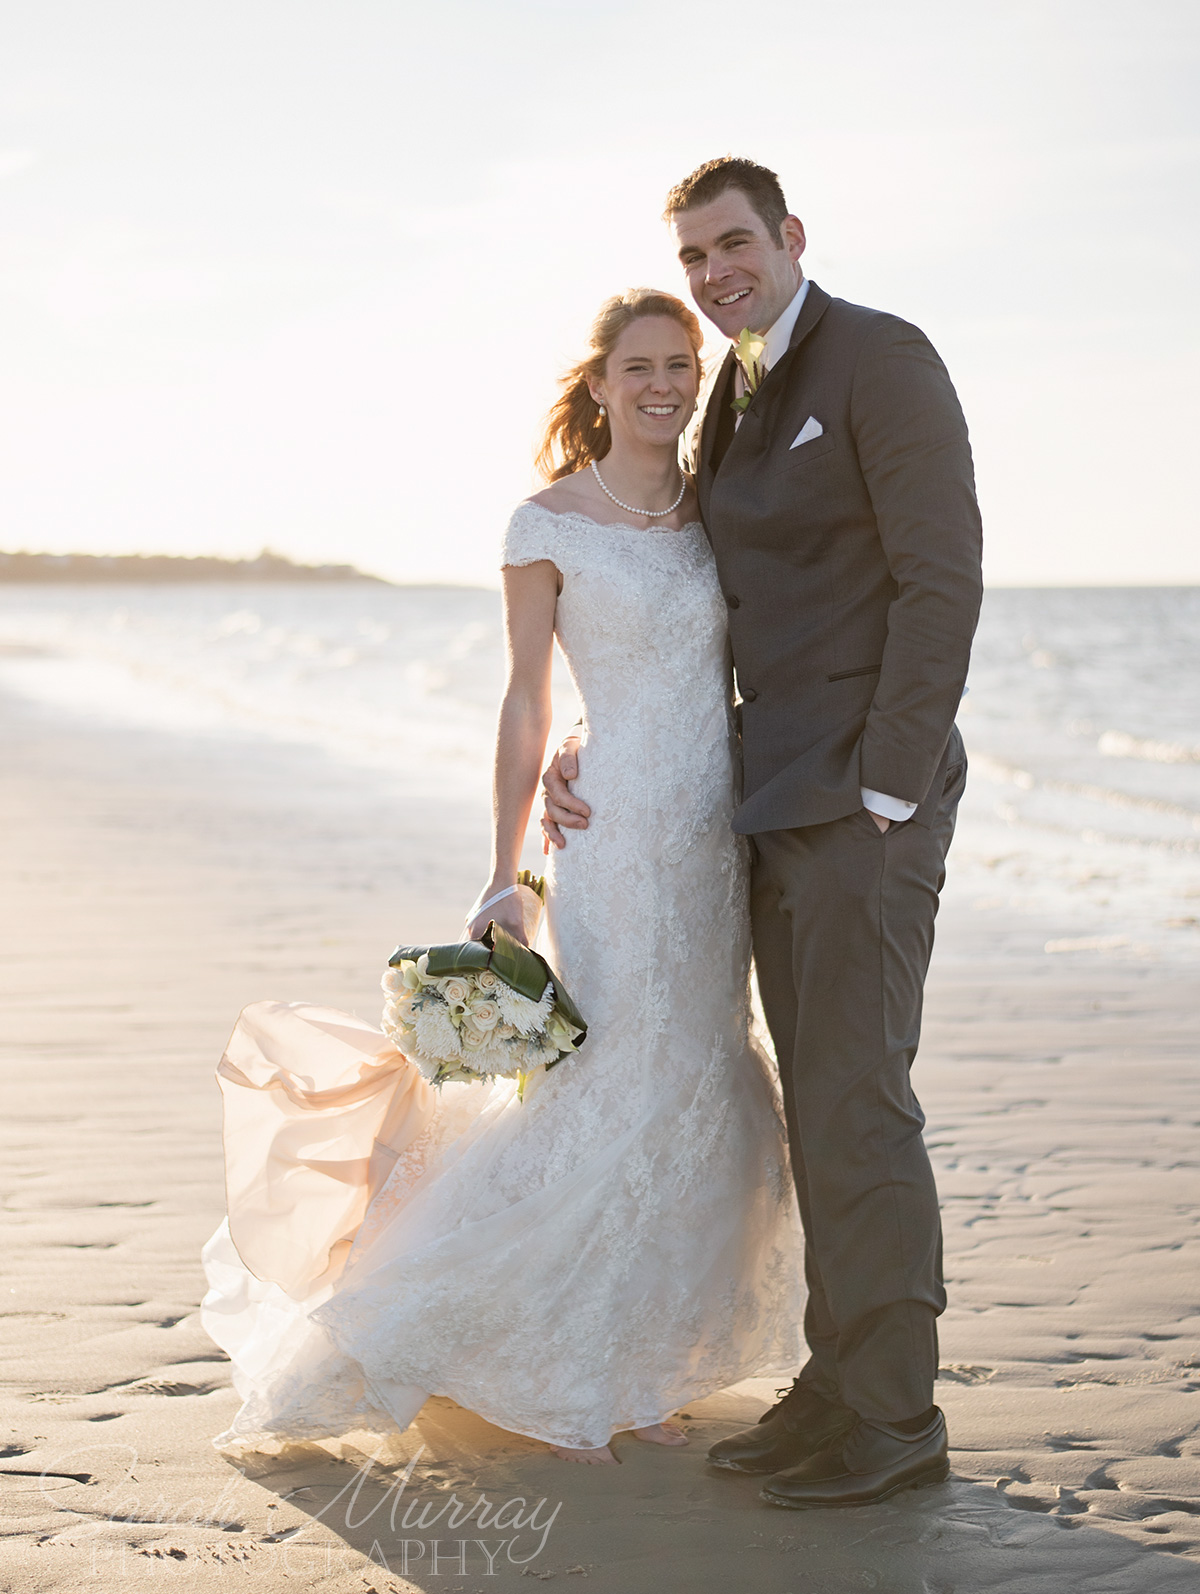 Ocean Edge Resort Winter Wedding on Cape Cod in Brewster, Massachusetts - Sarah Murray Photography